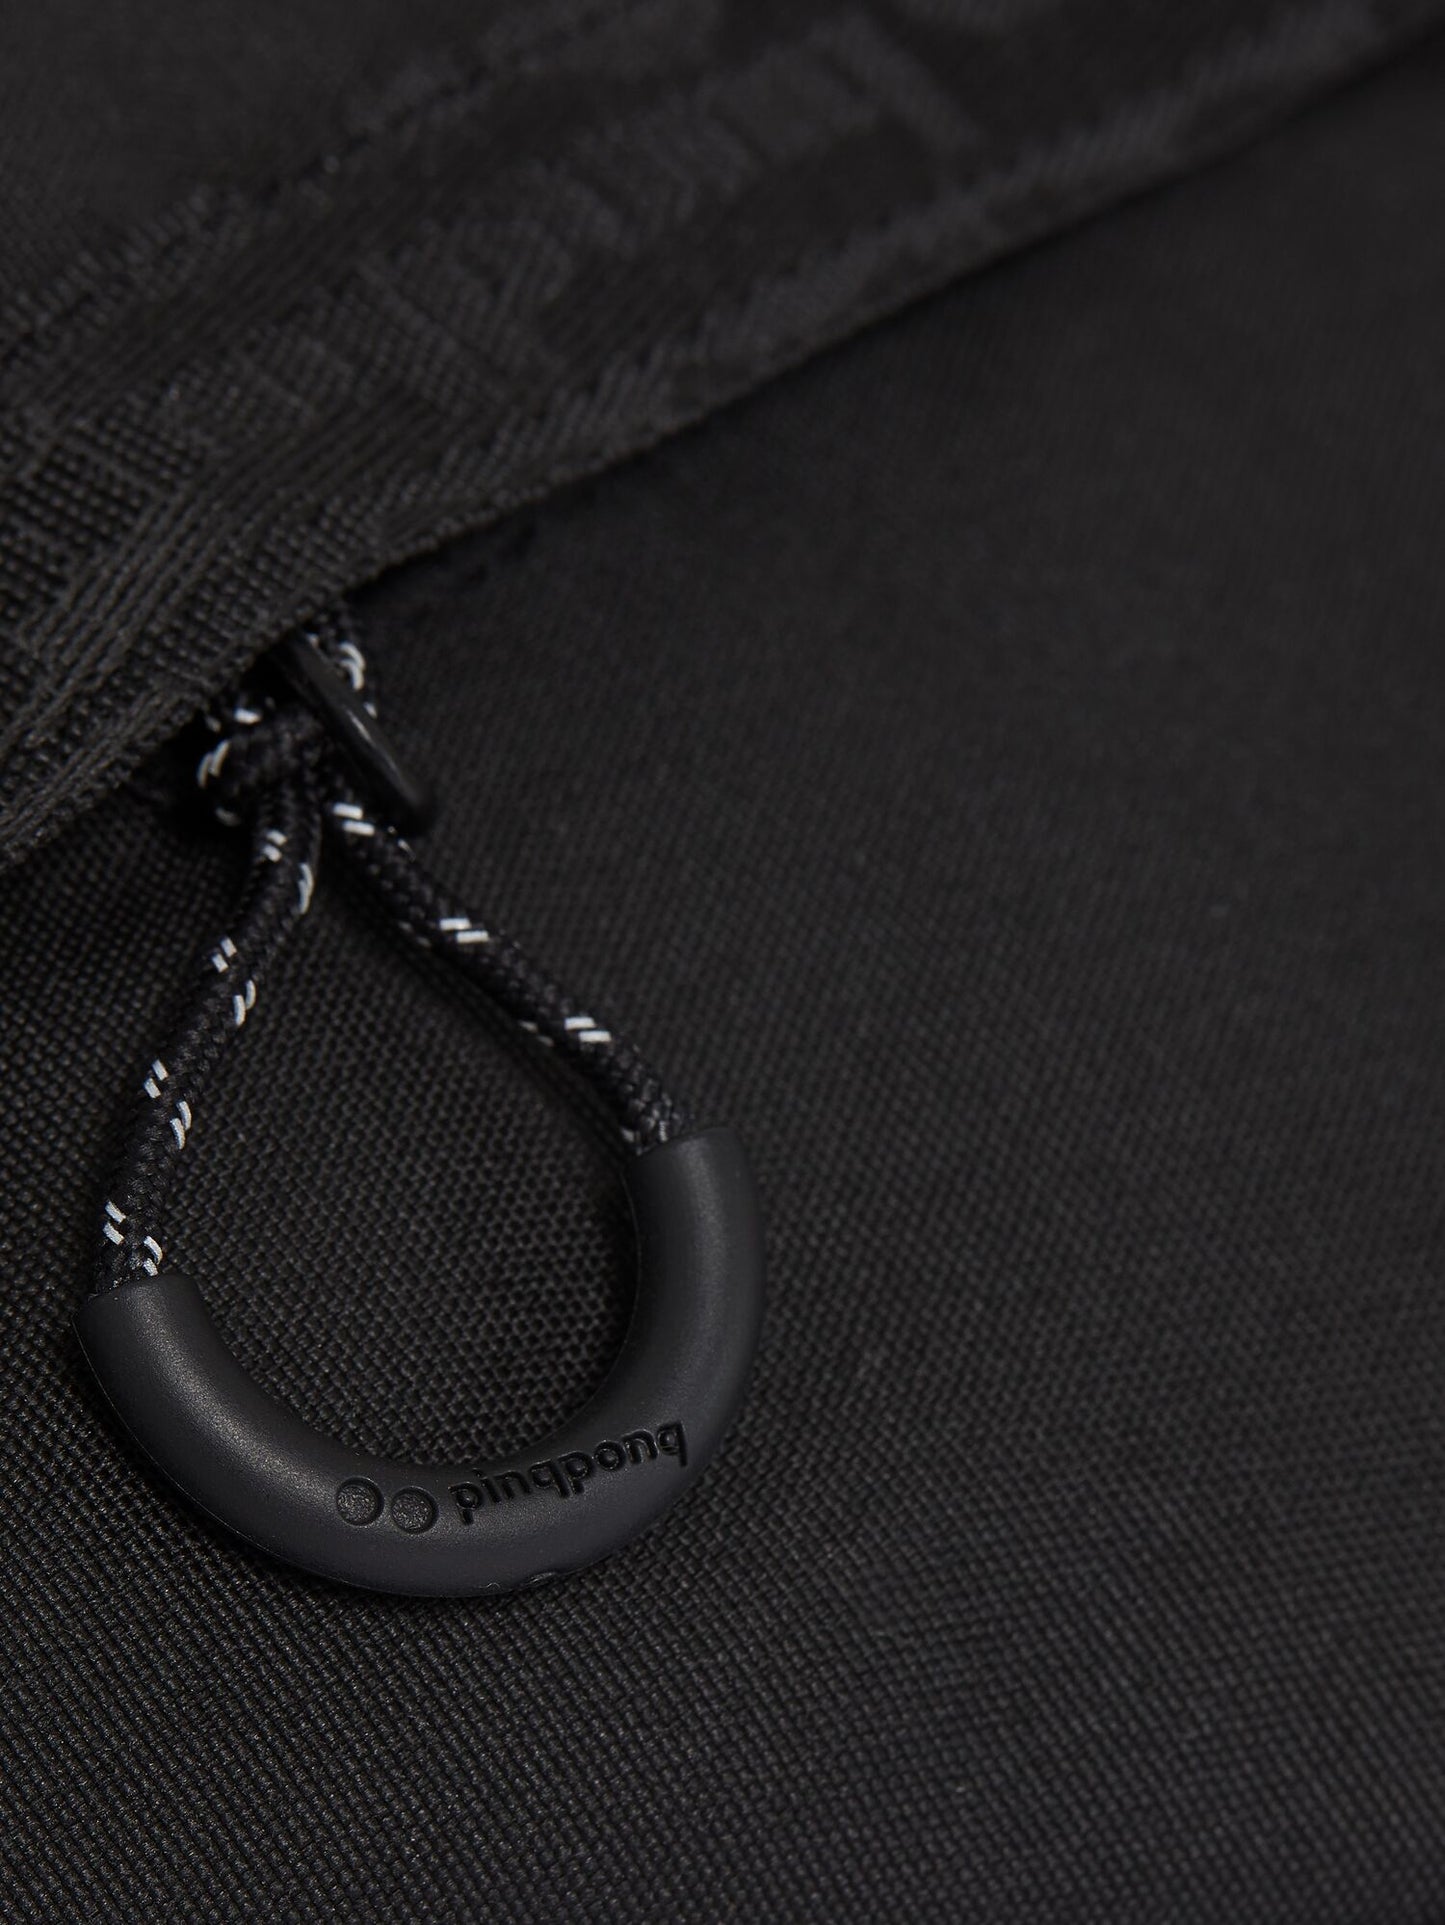 pinqponq-hip-bag-brik-rooted-black-detail